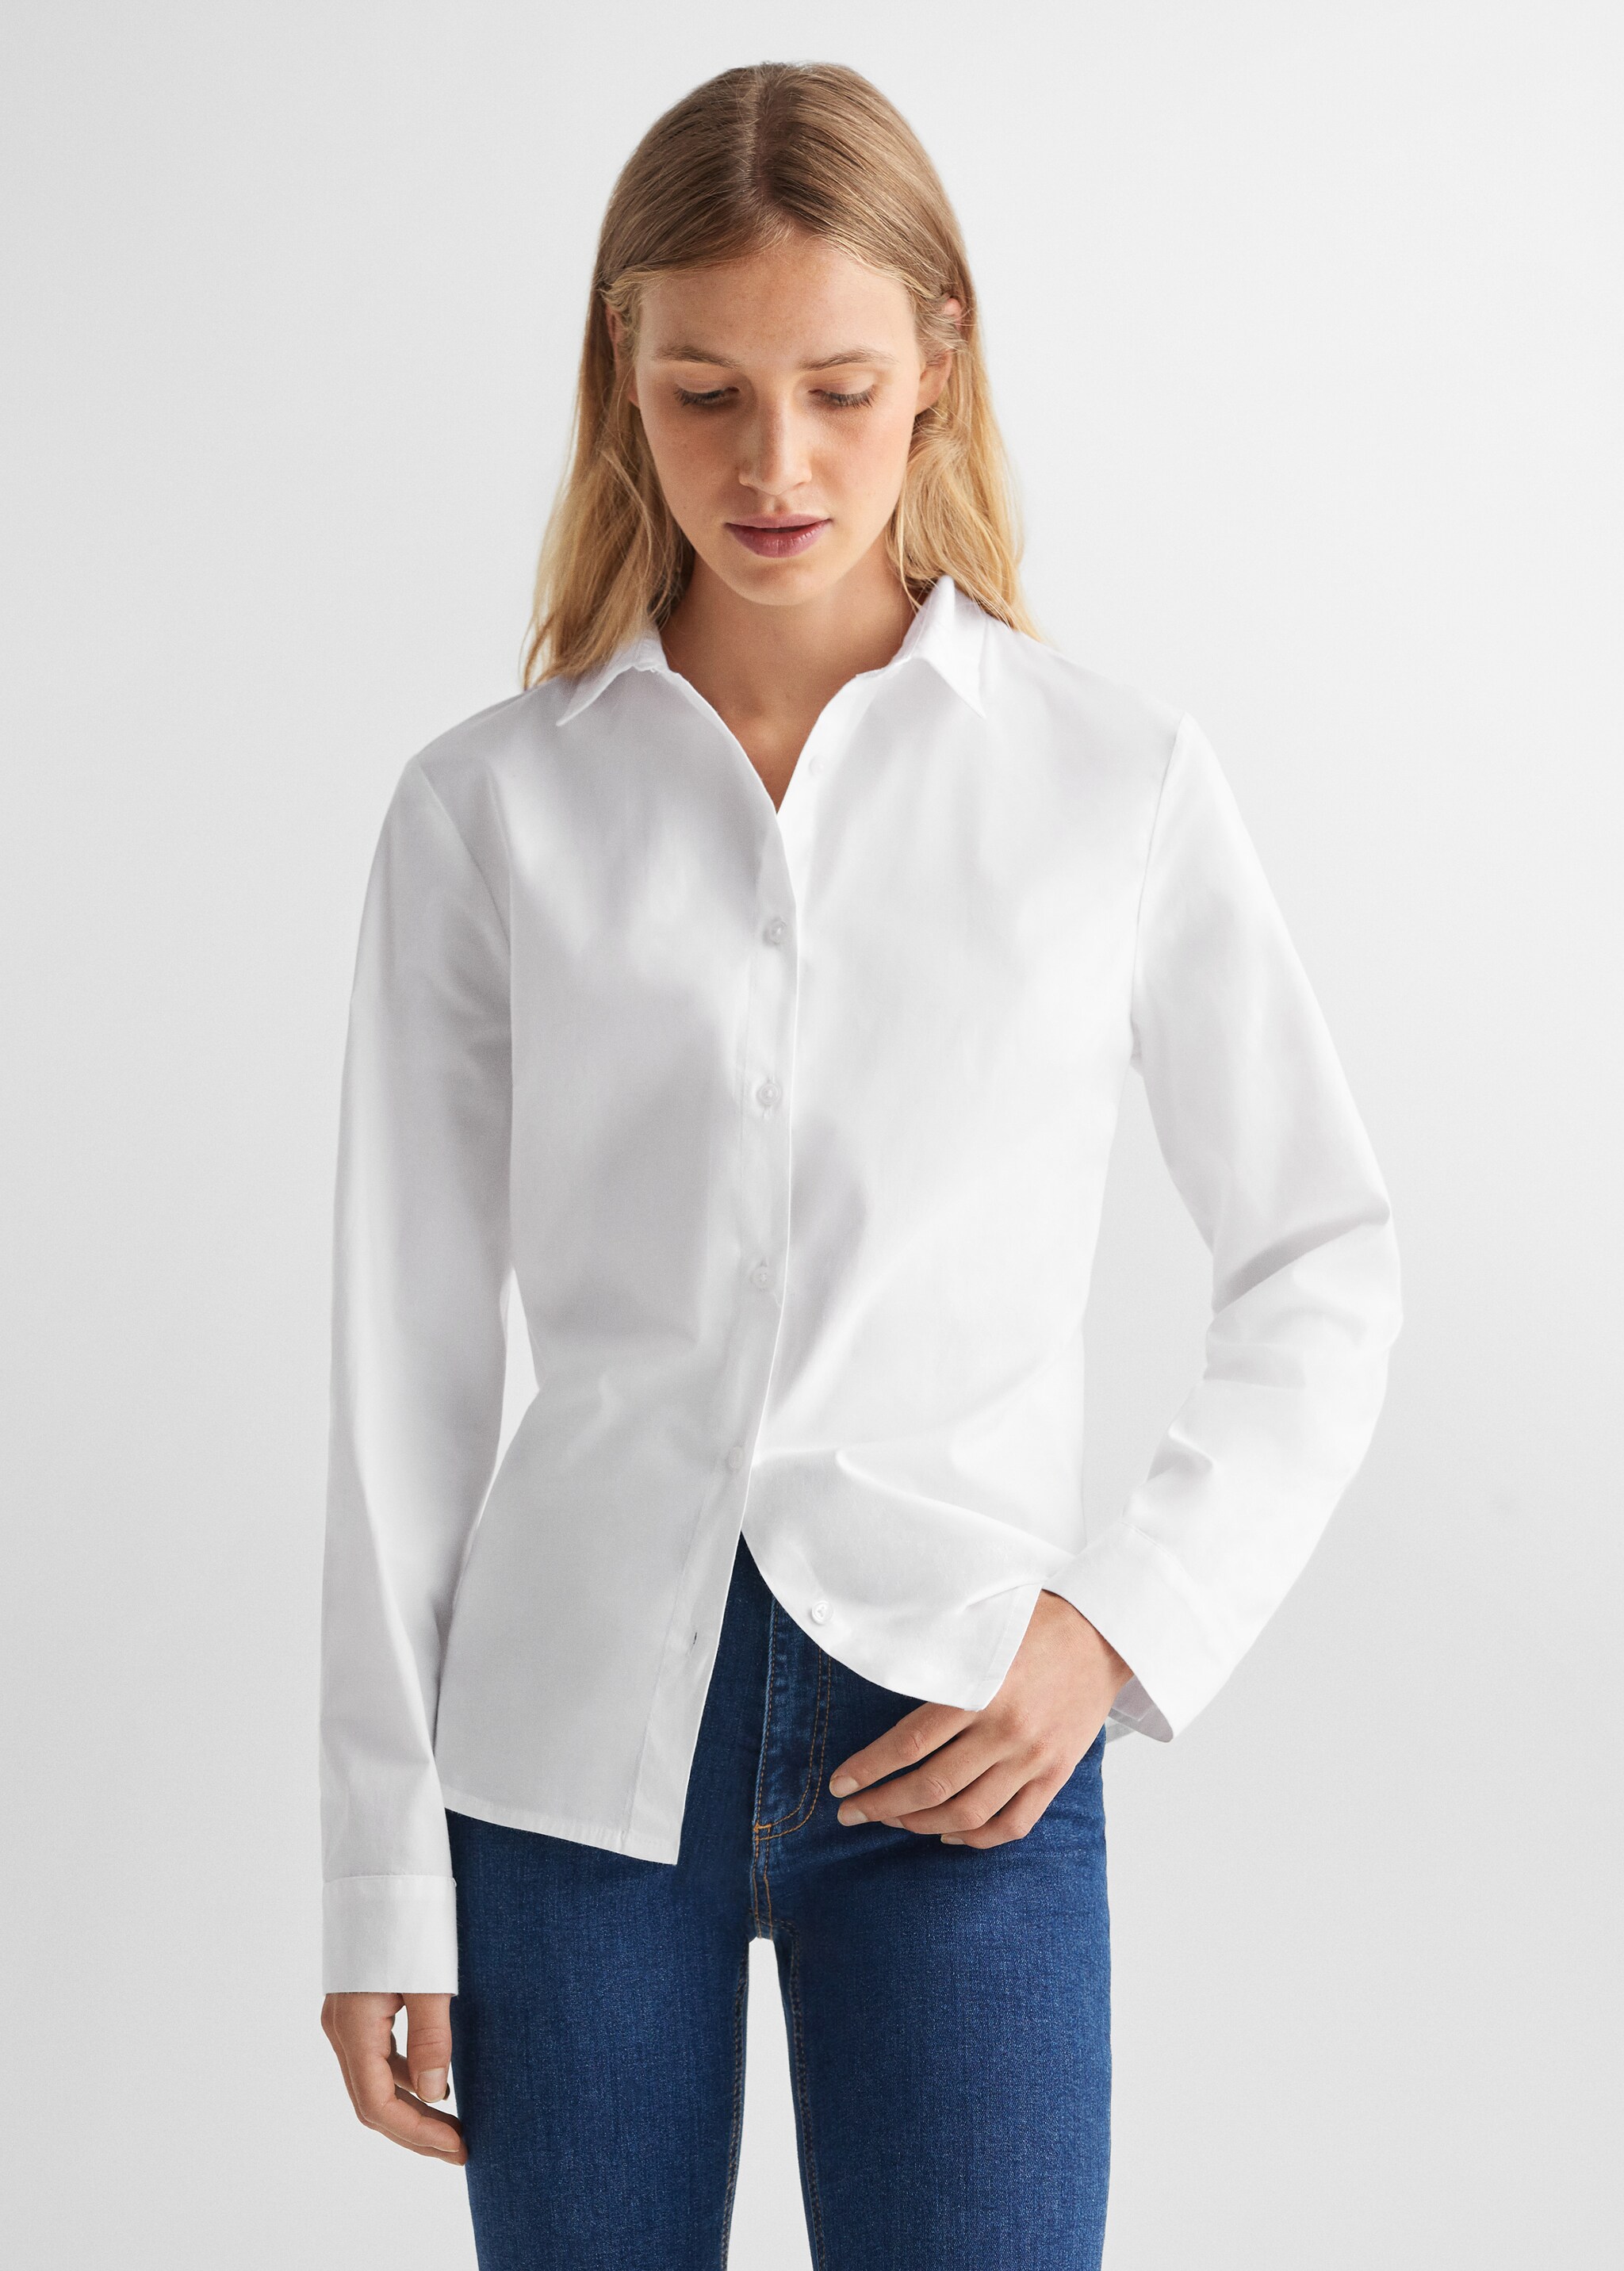 Slim fit cotton shirt - Middenvlak